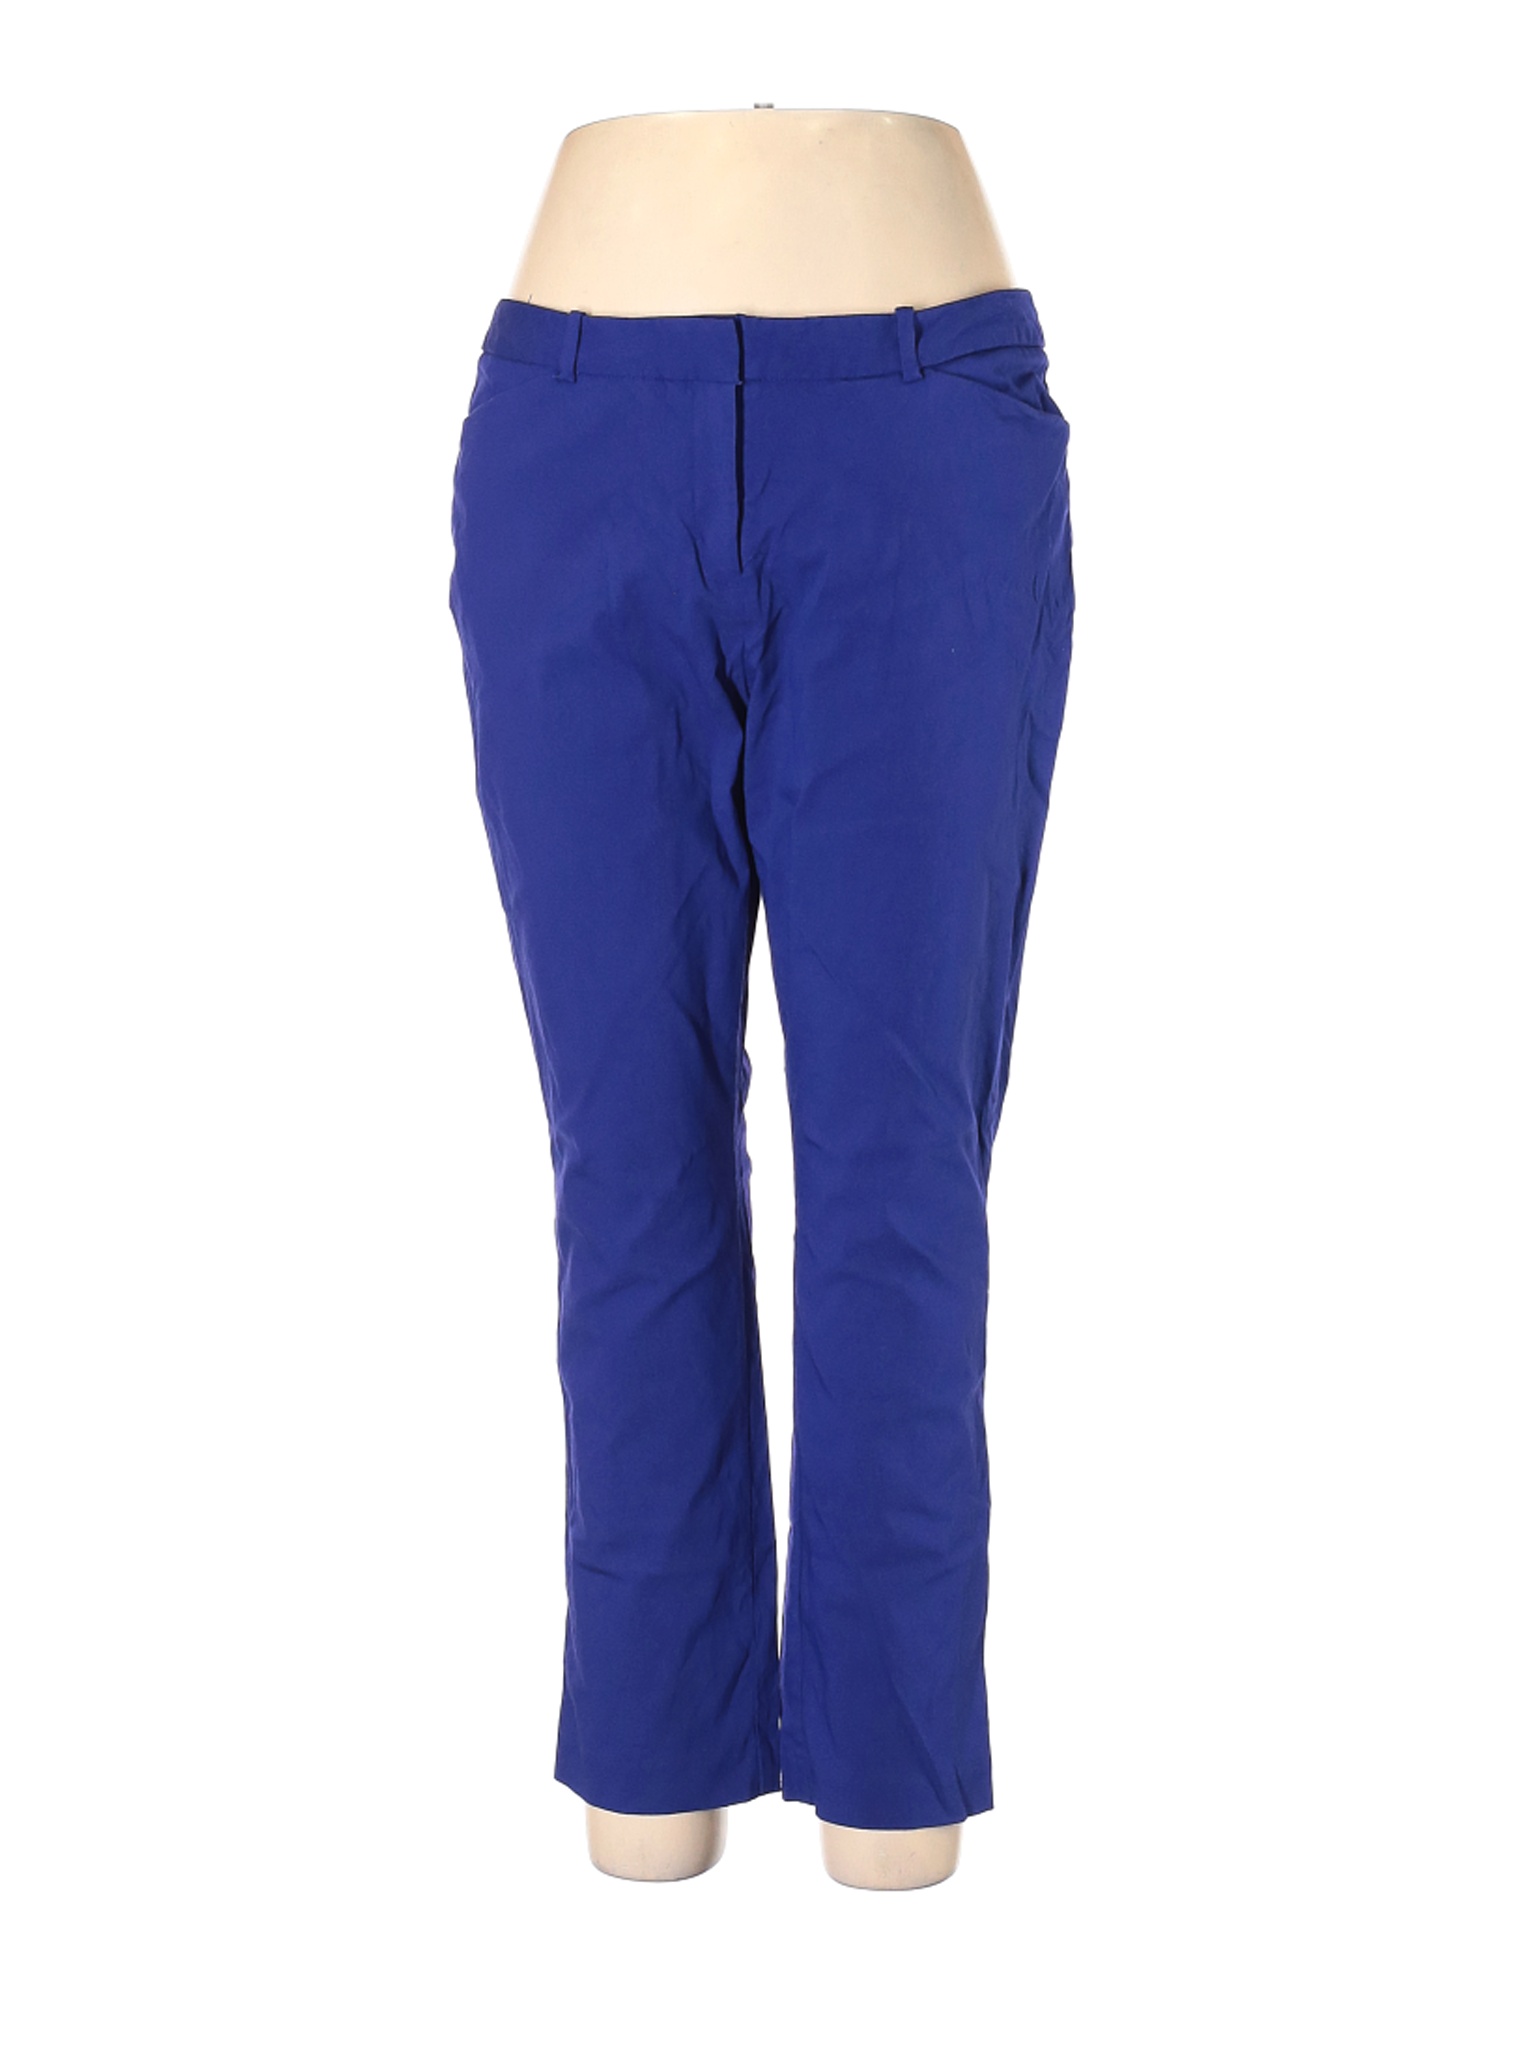 Worthington Women Blue Dress Pants 16 | eBay